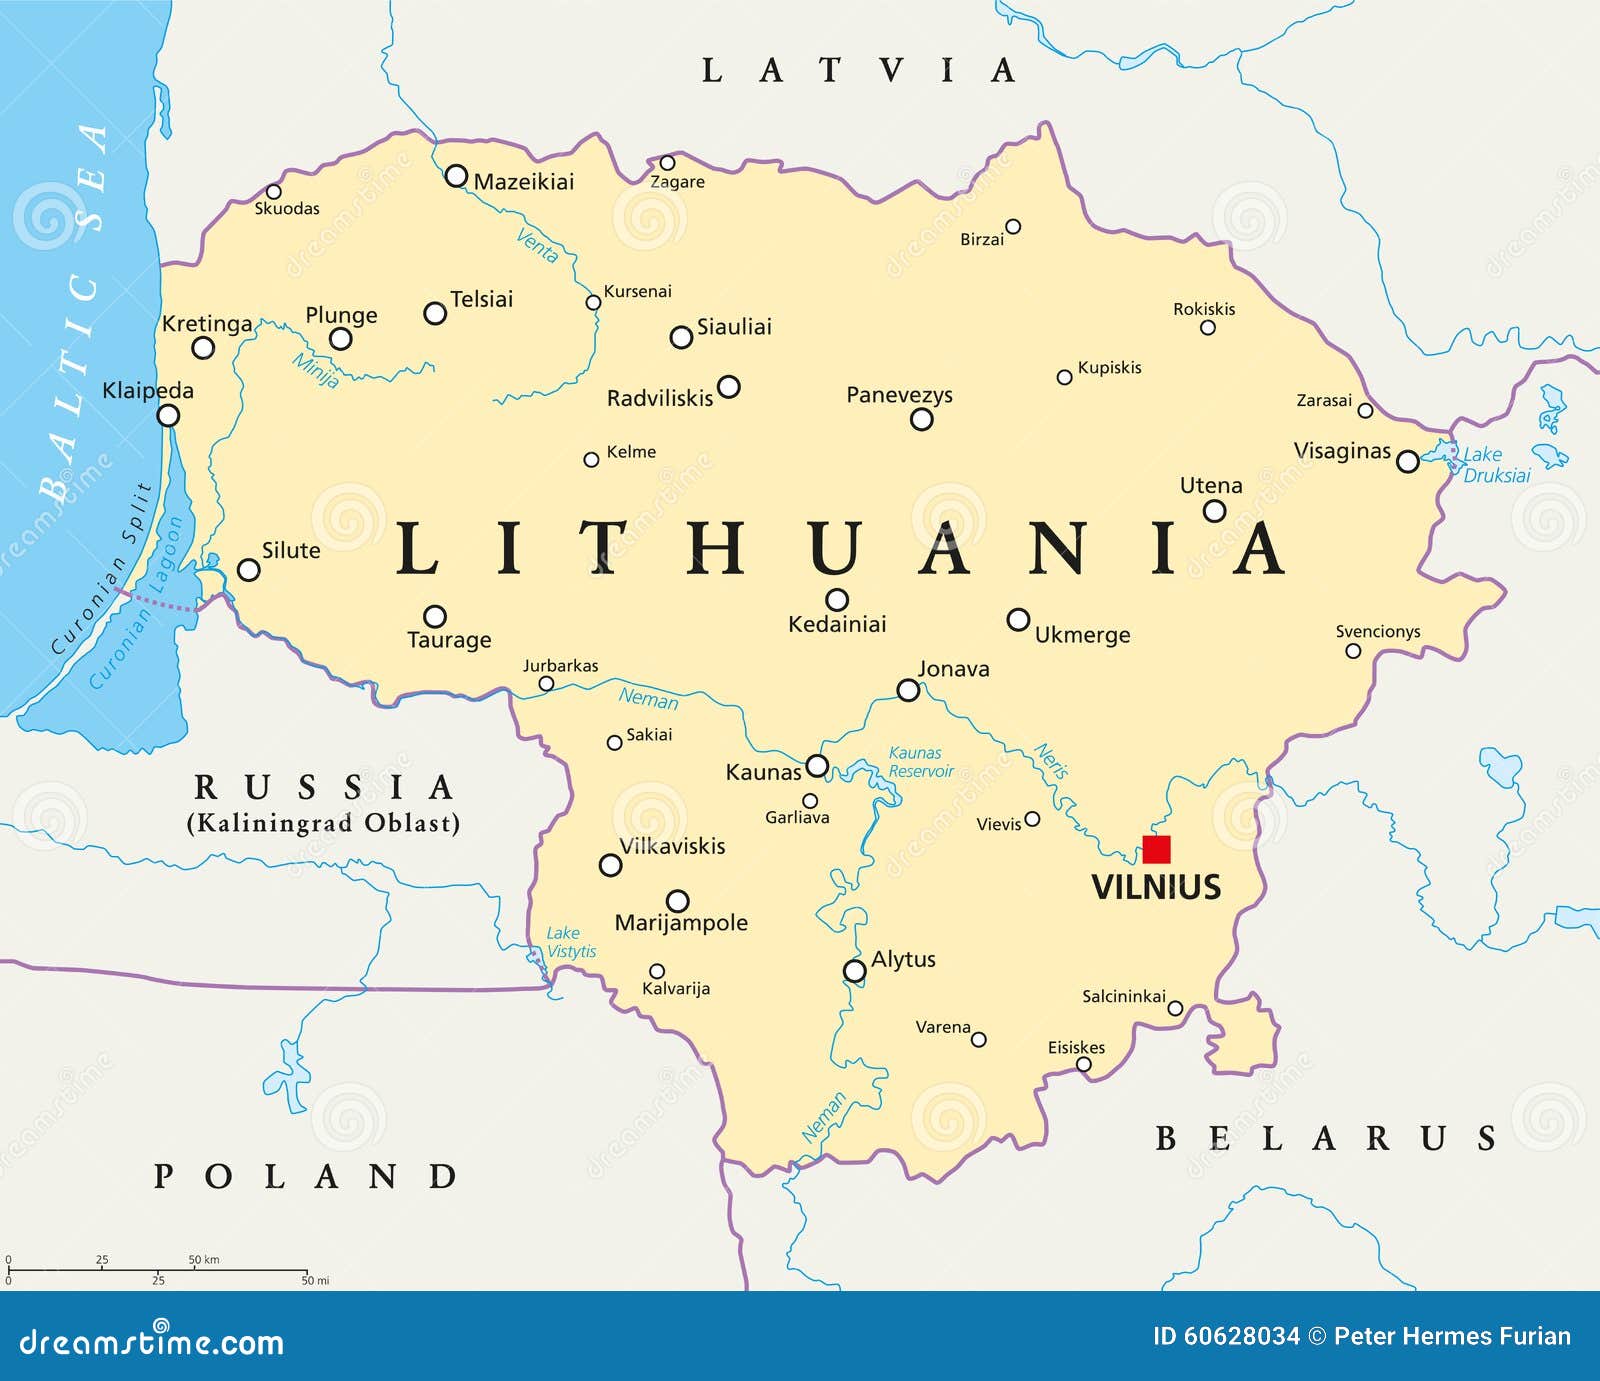 mapa-poltico-de-lituania-60628034.jpg